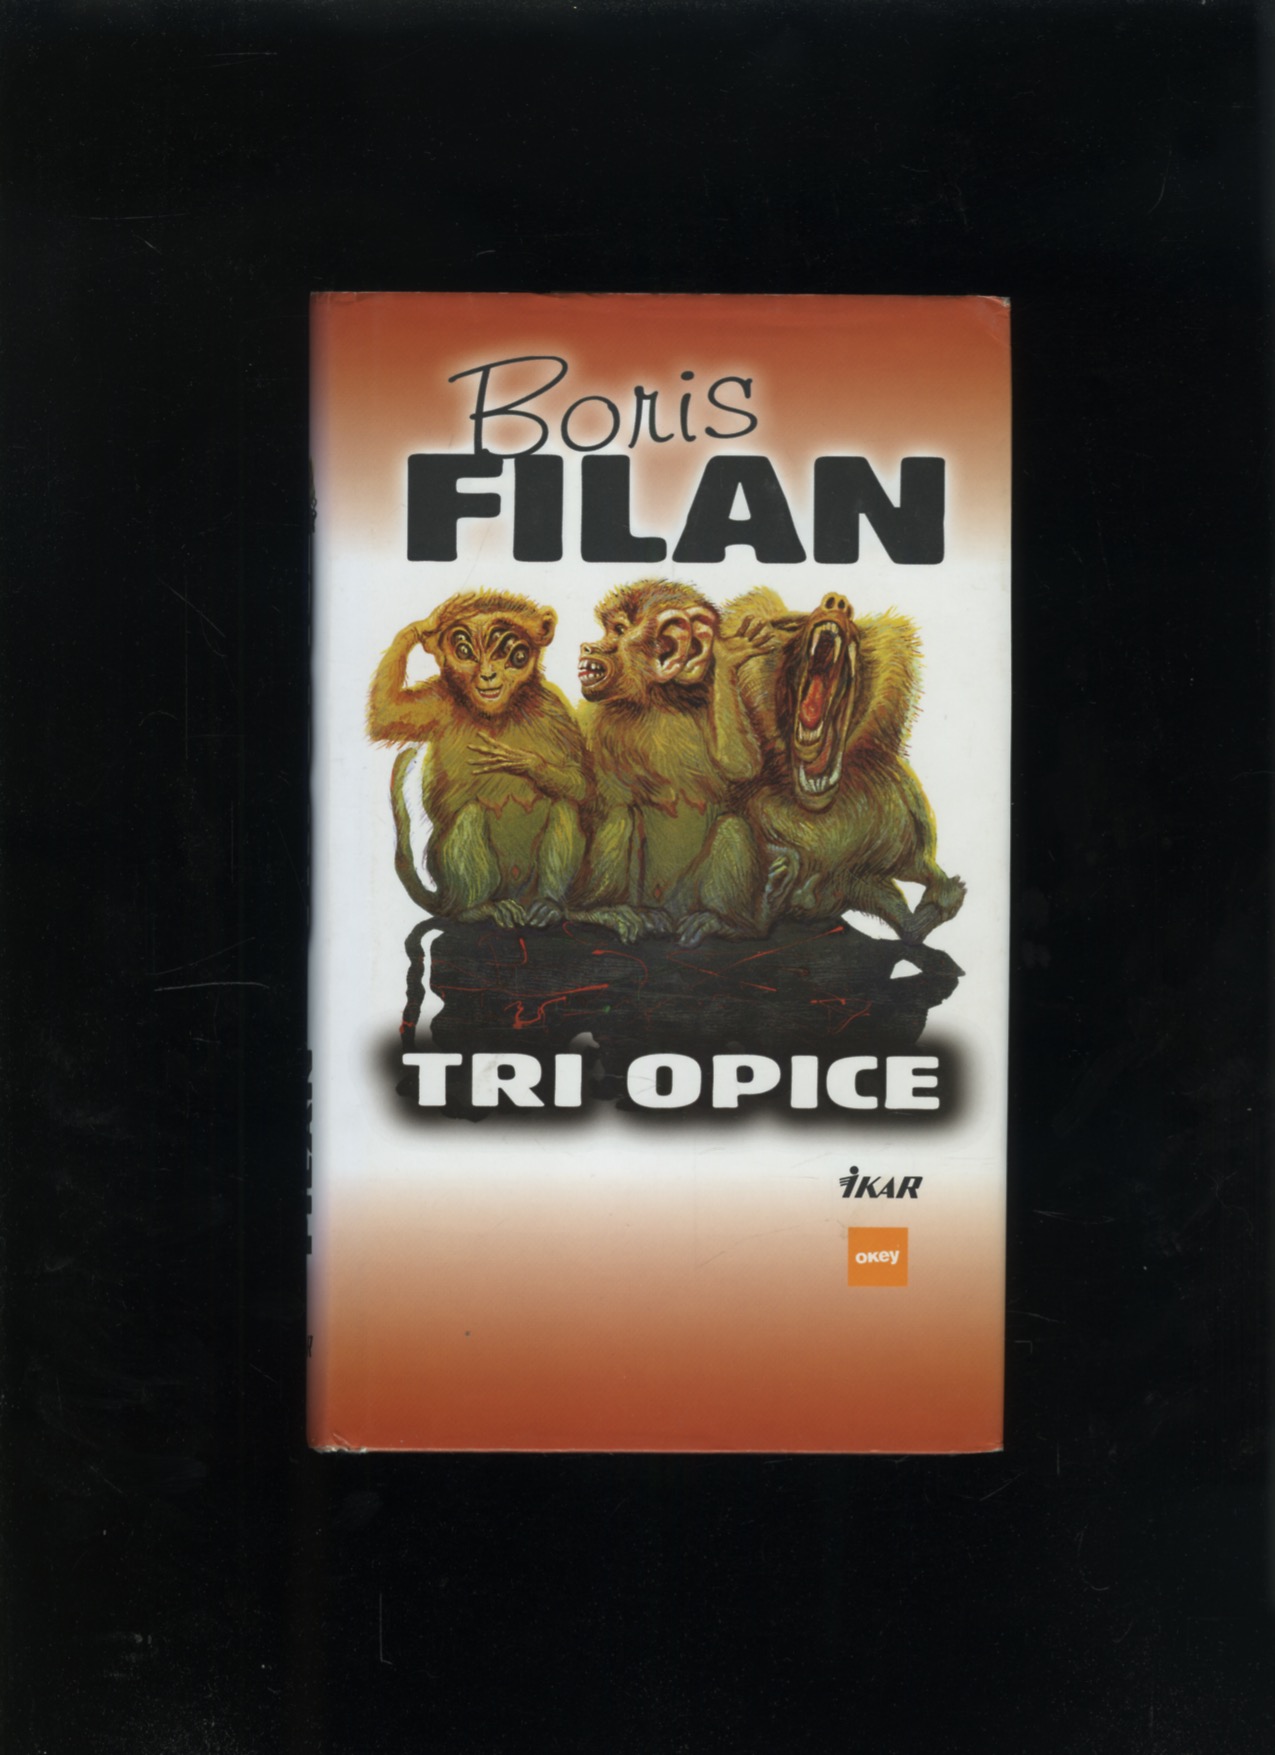 Tri opice (Boris Filan)